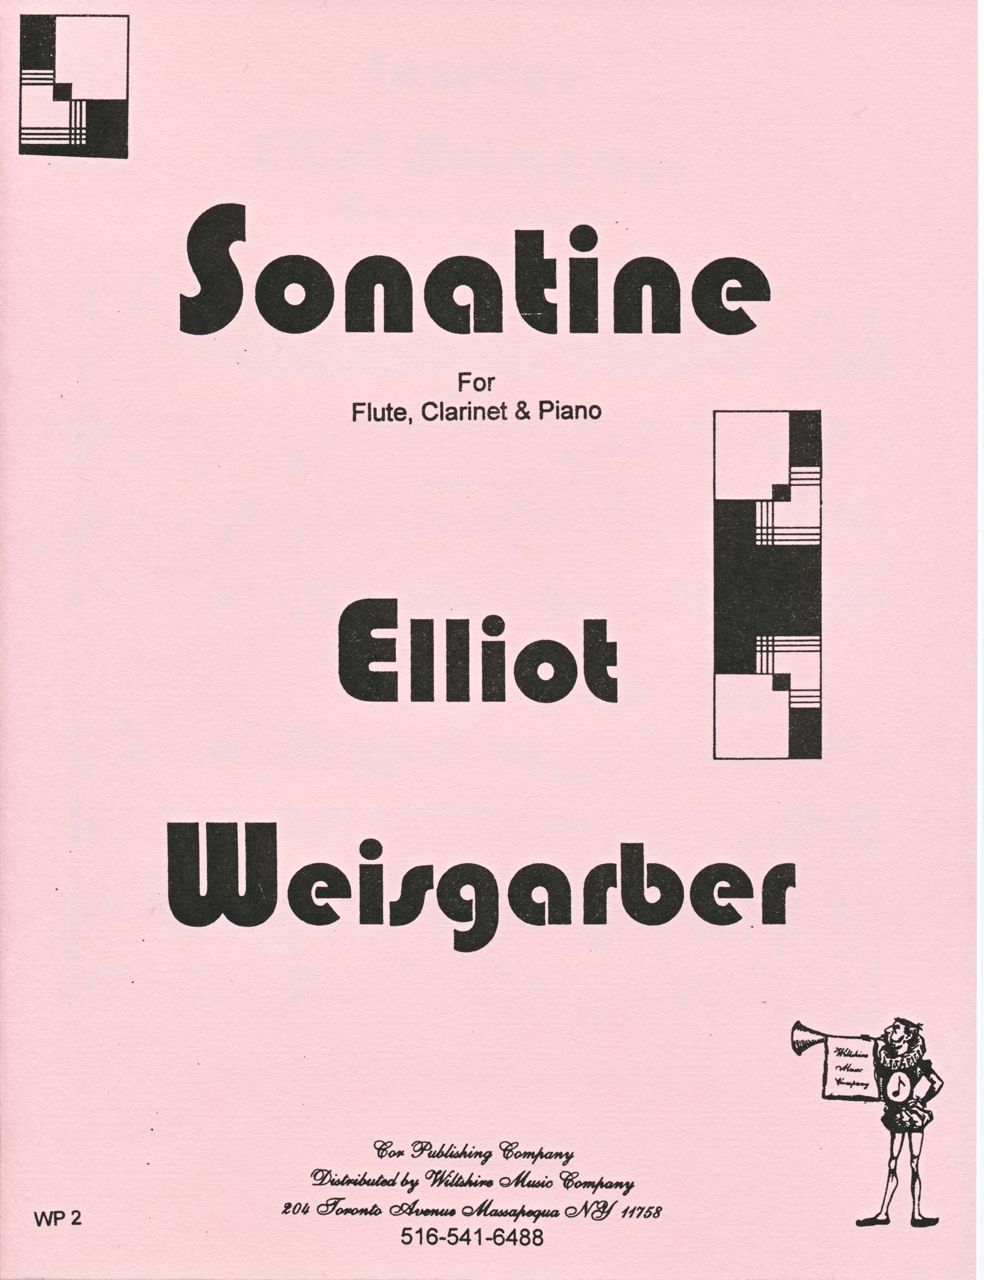 Sonatine, Elliot Weisgarber (flute, clarinet & piano)